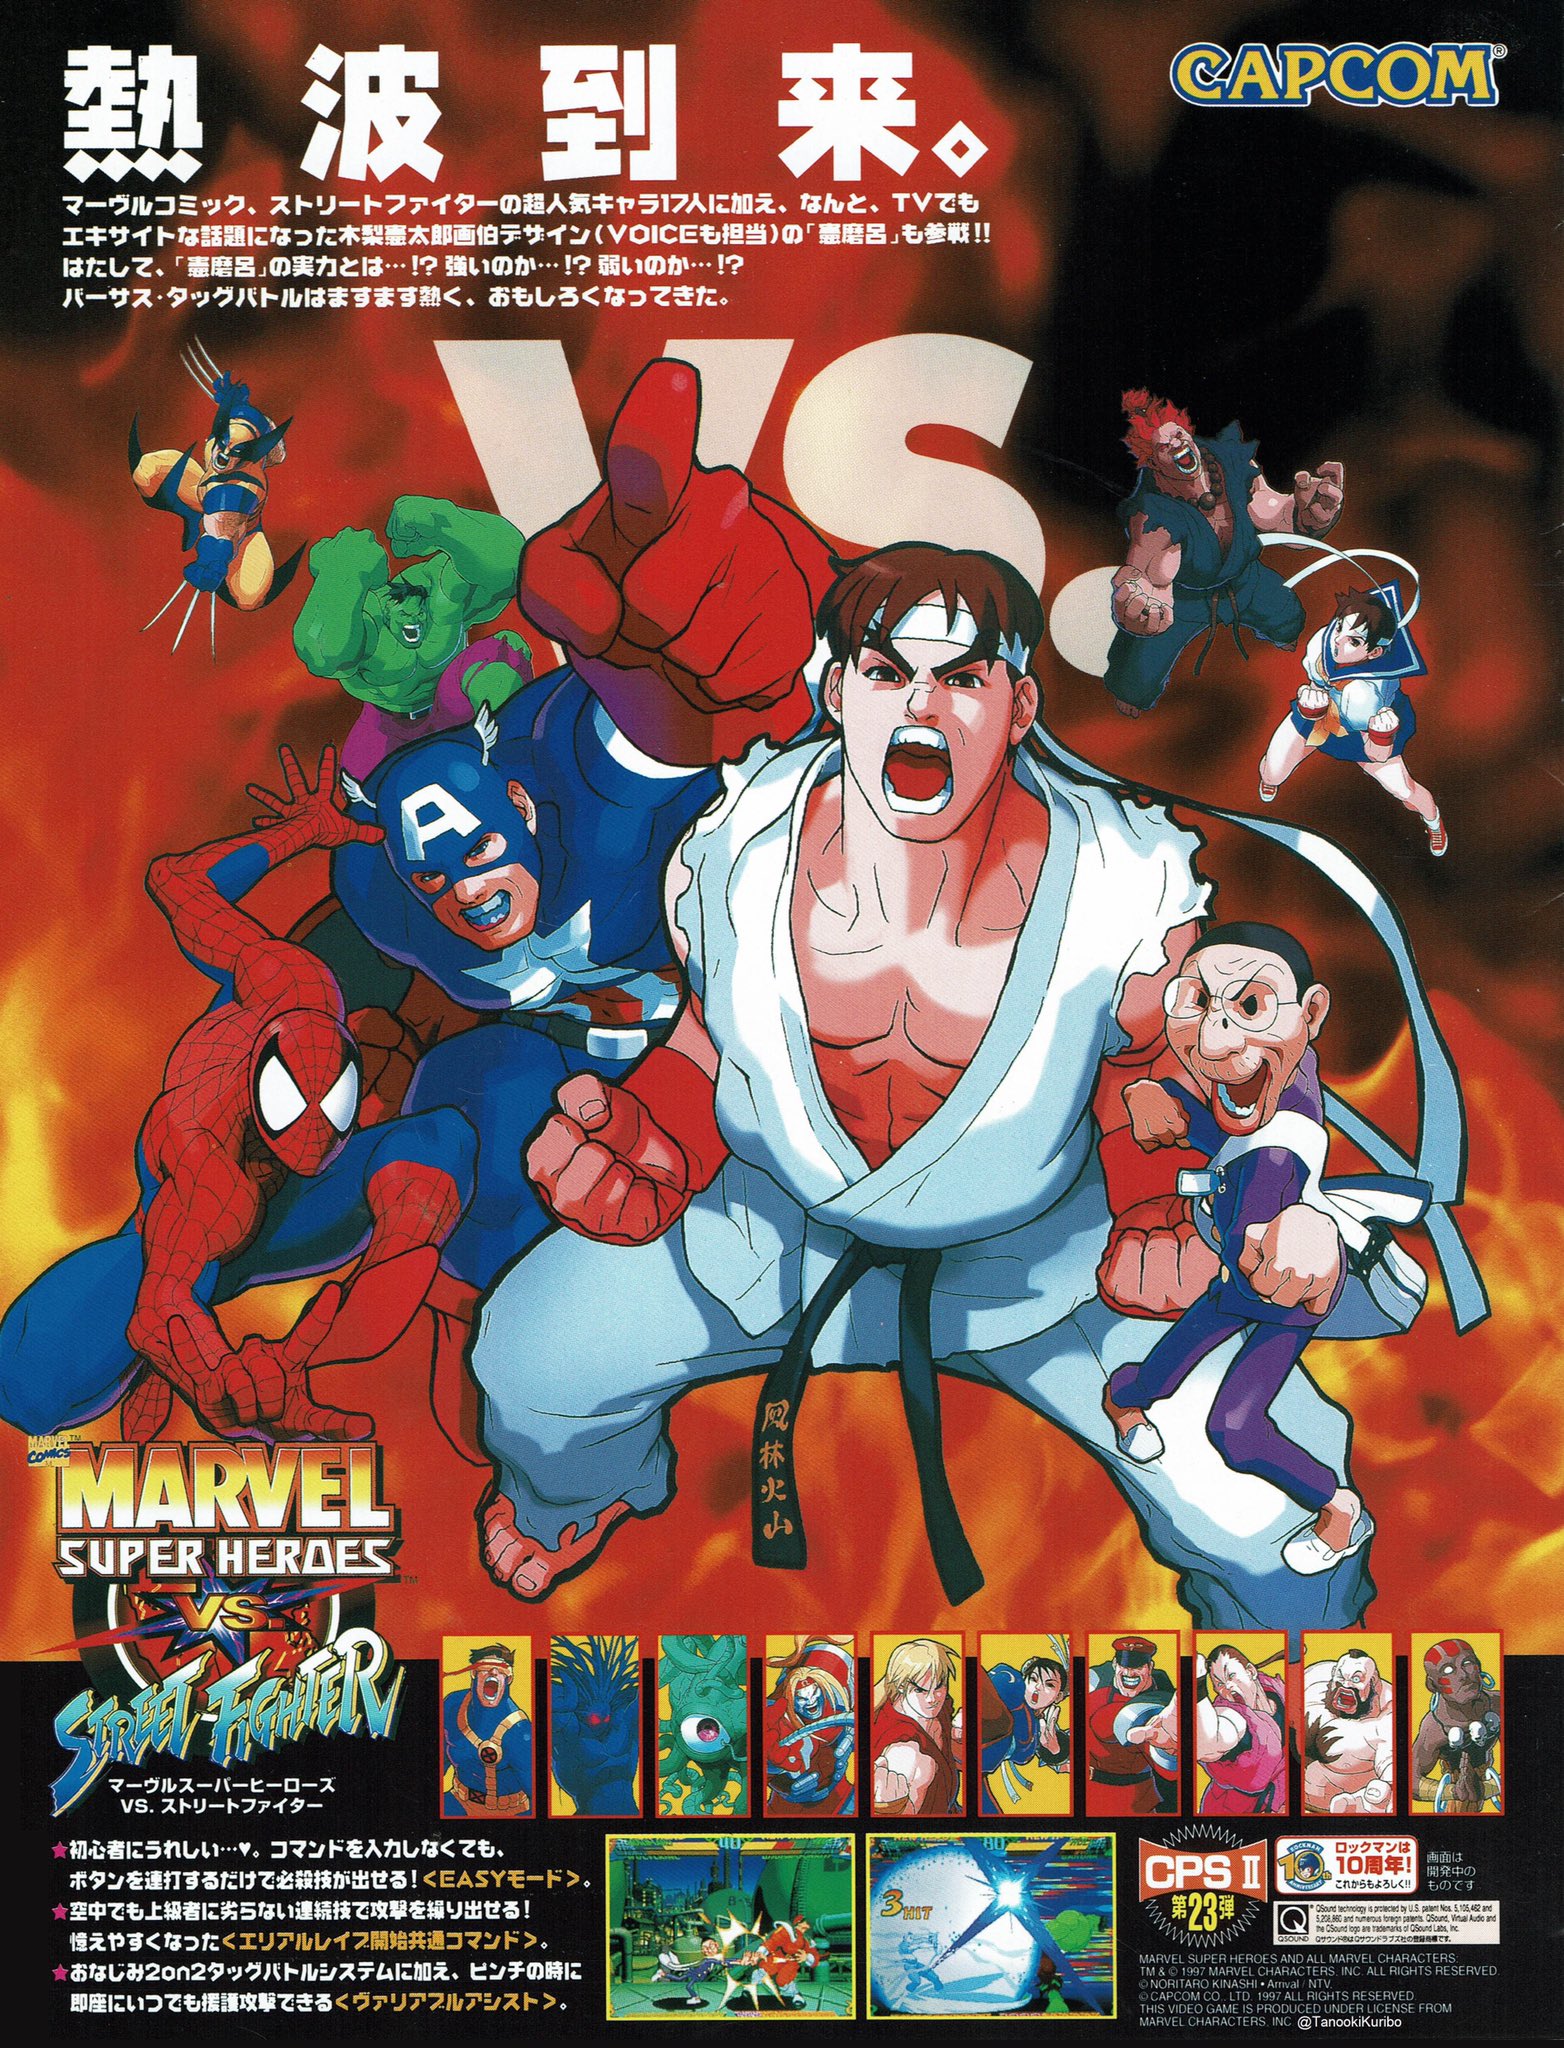 Marvel Super Heroes Vs. Street Fighter - Capcom - Rare Promo Art ...